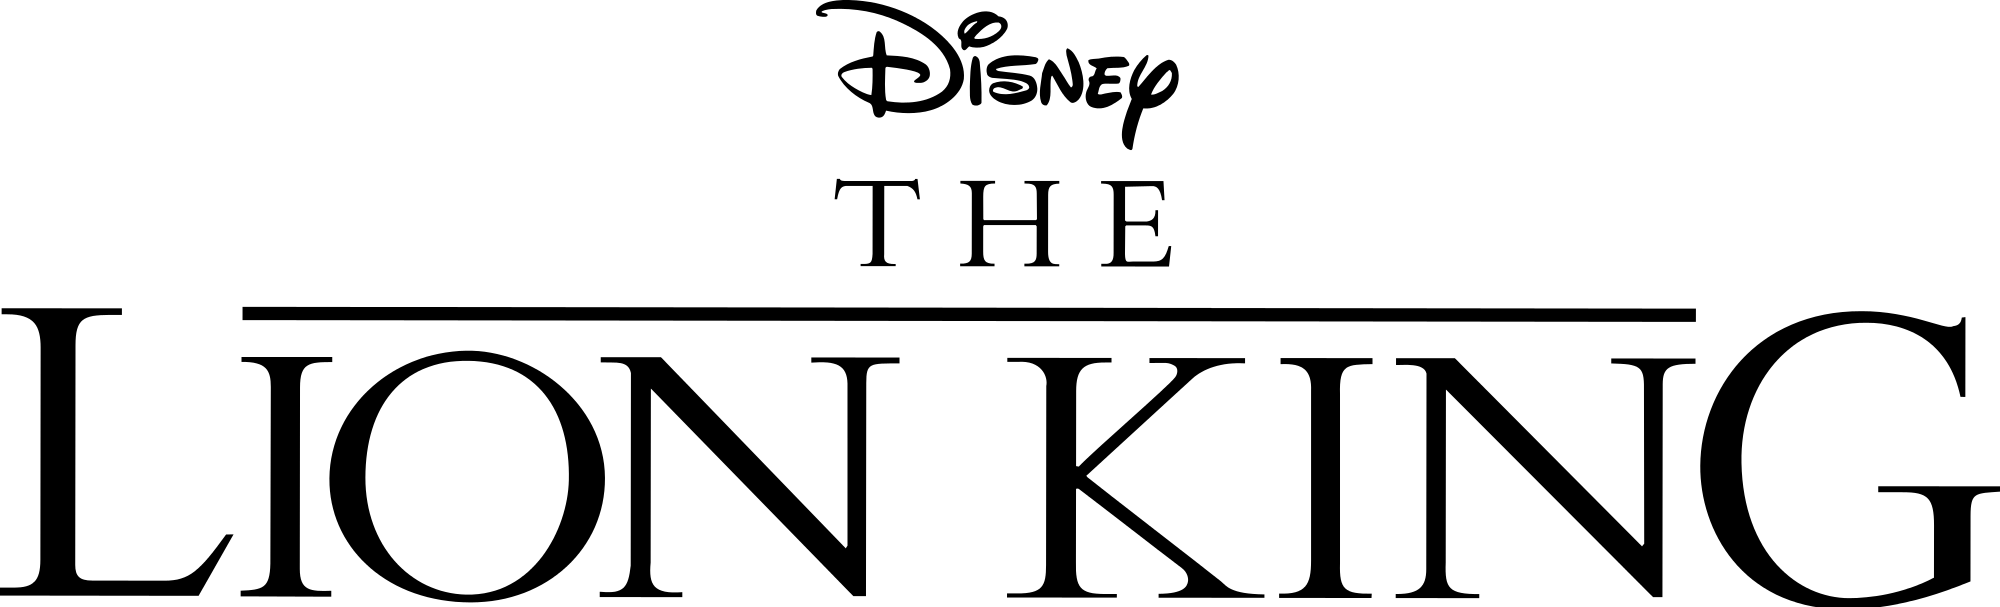 Disney The Lion King Logo - File:The Lion King logo.svg - Wikimedia Commons